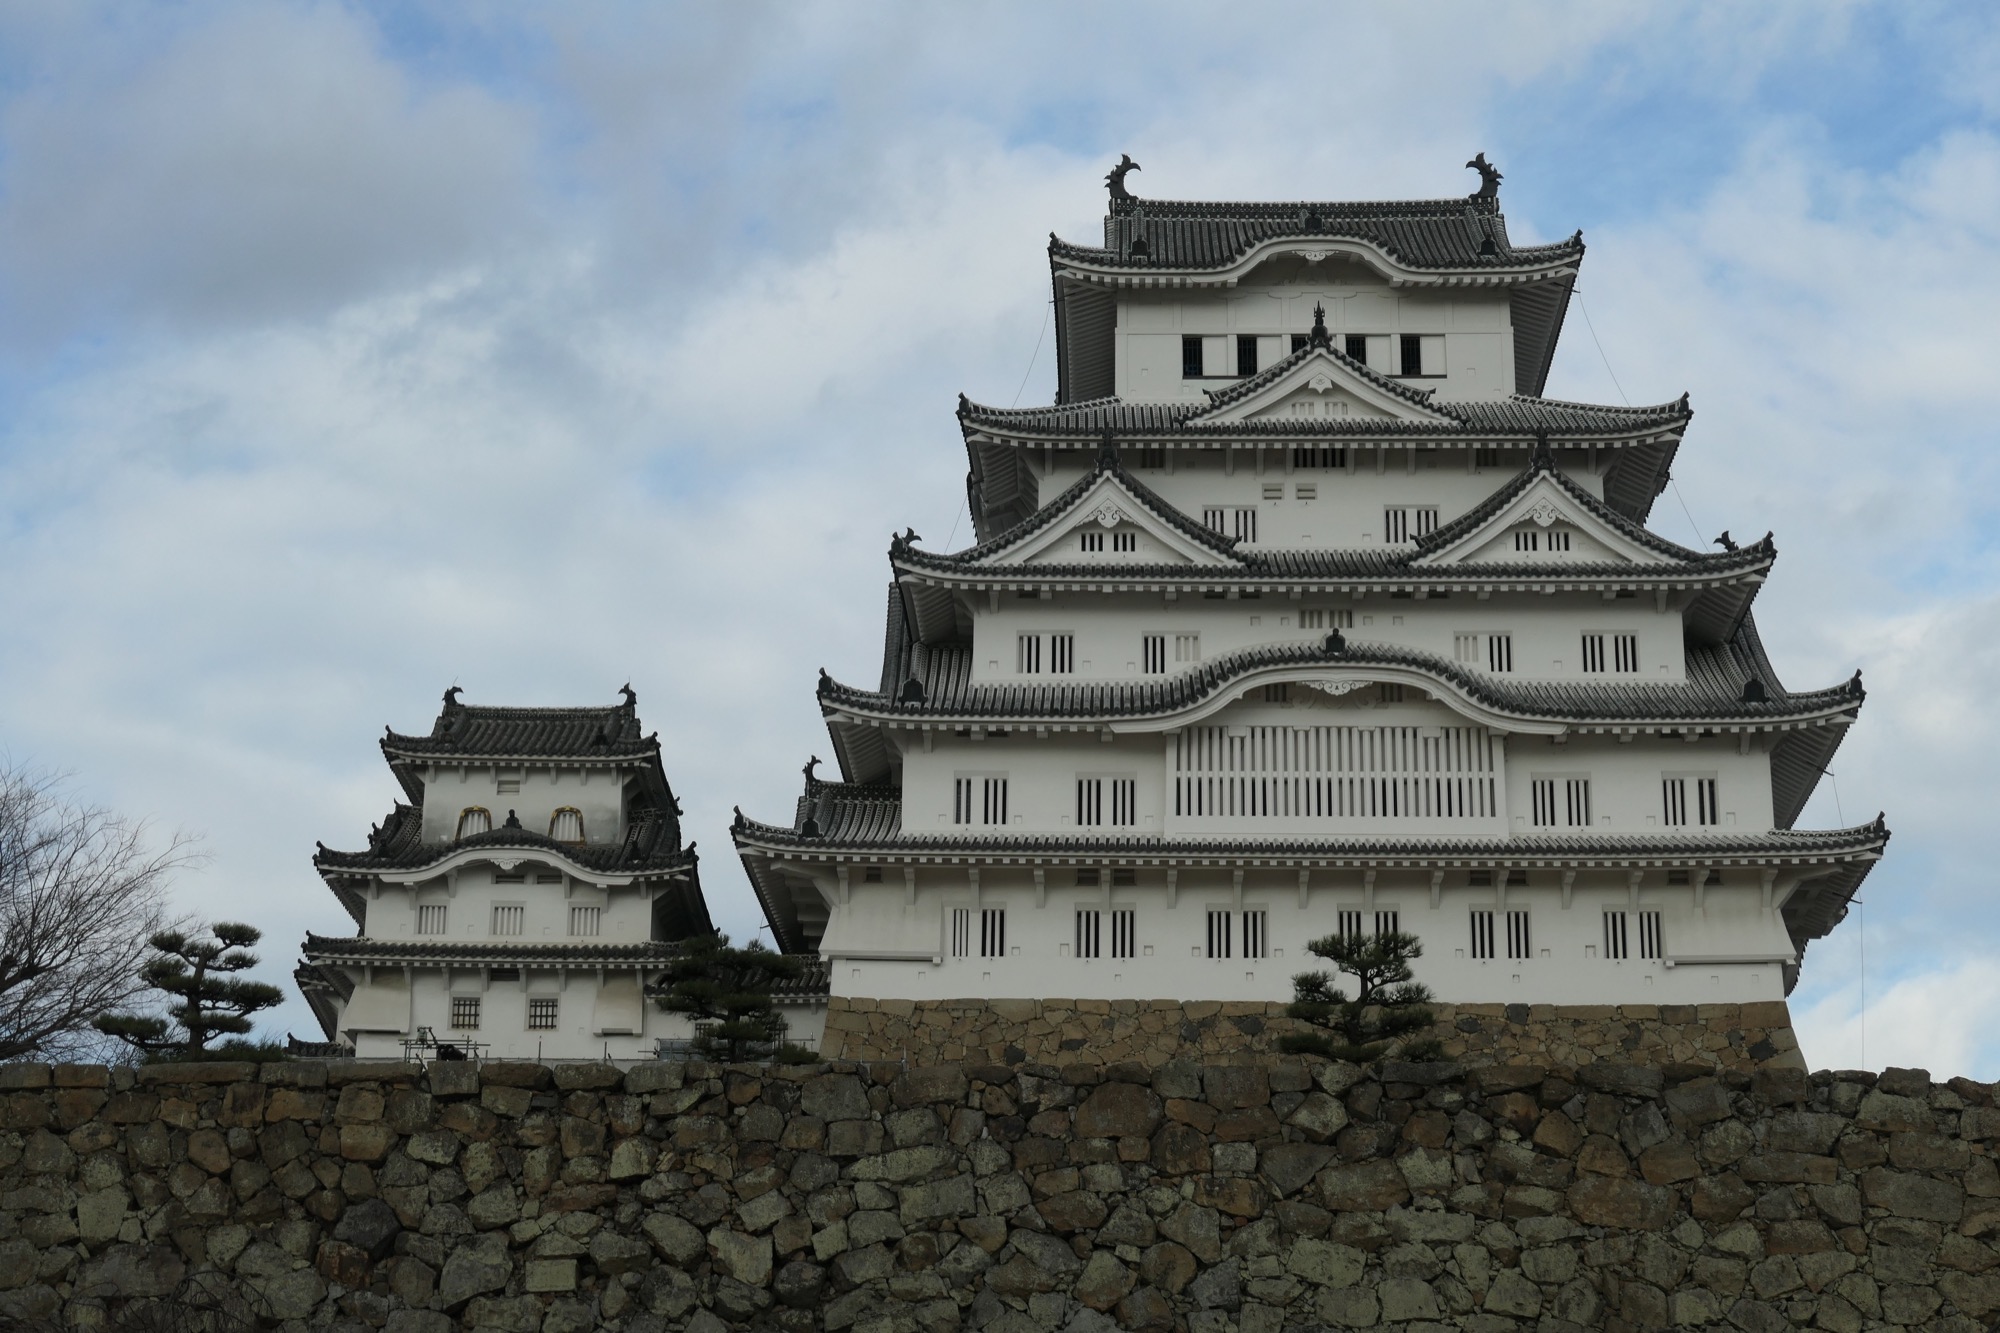 Himeji Castle Main Keep and Adjacent Keep